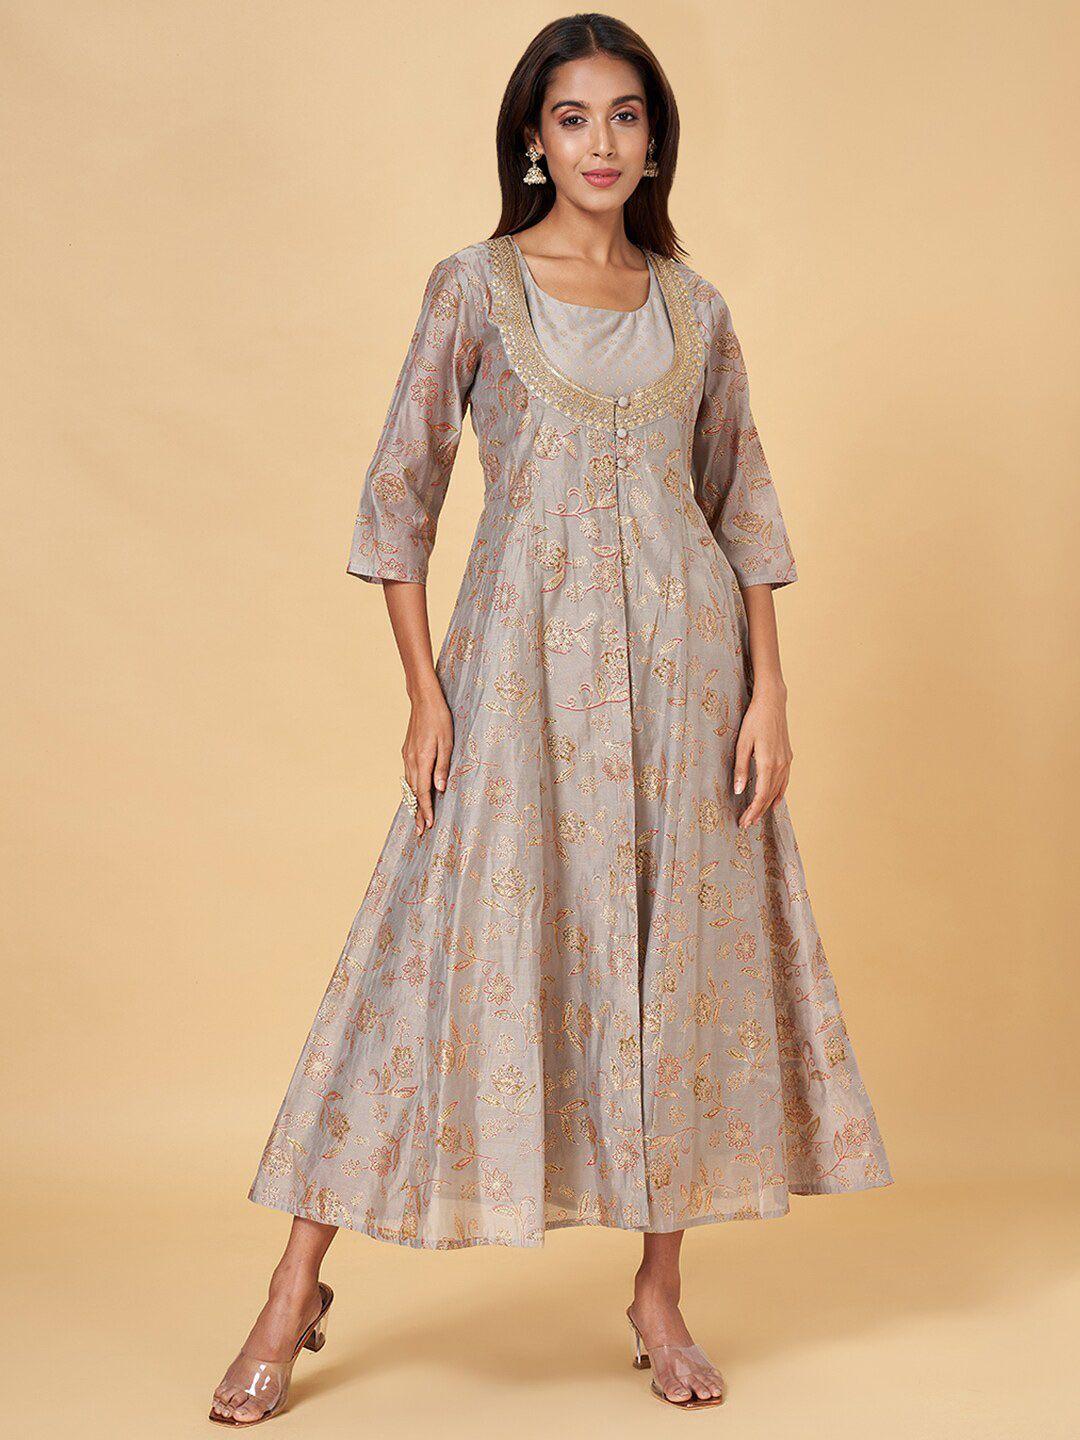 rangmanch by pantaloons  floral print maxi ethnic dress